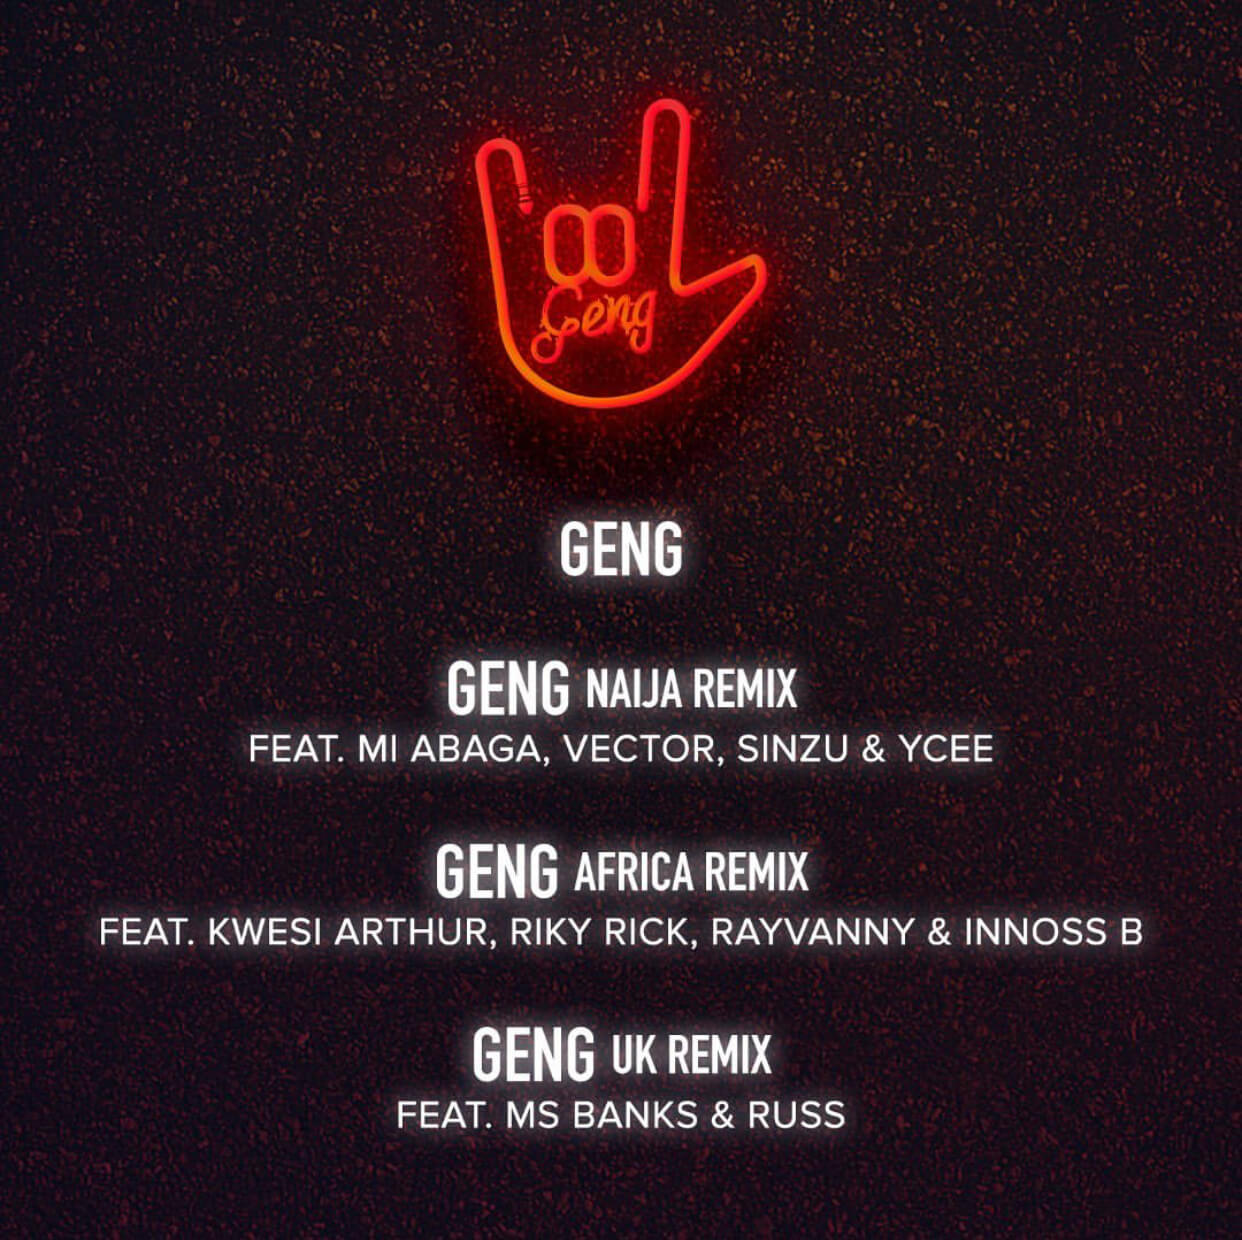 Mayorkun teams up with M.I Abaga, Vector, Sinzu and Ycee on “Geng Naija Remix”